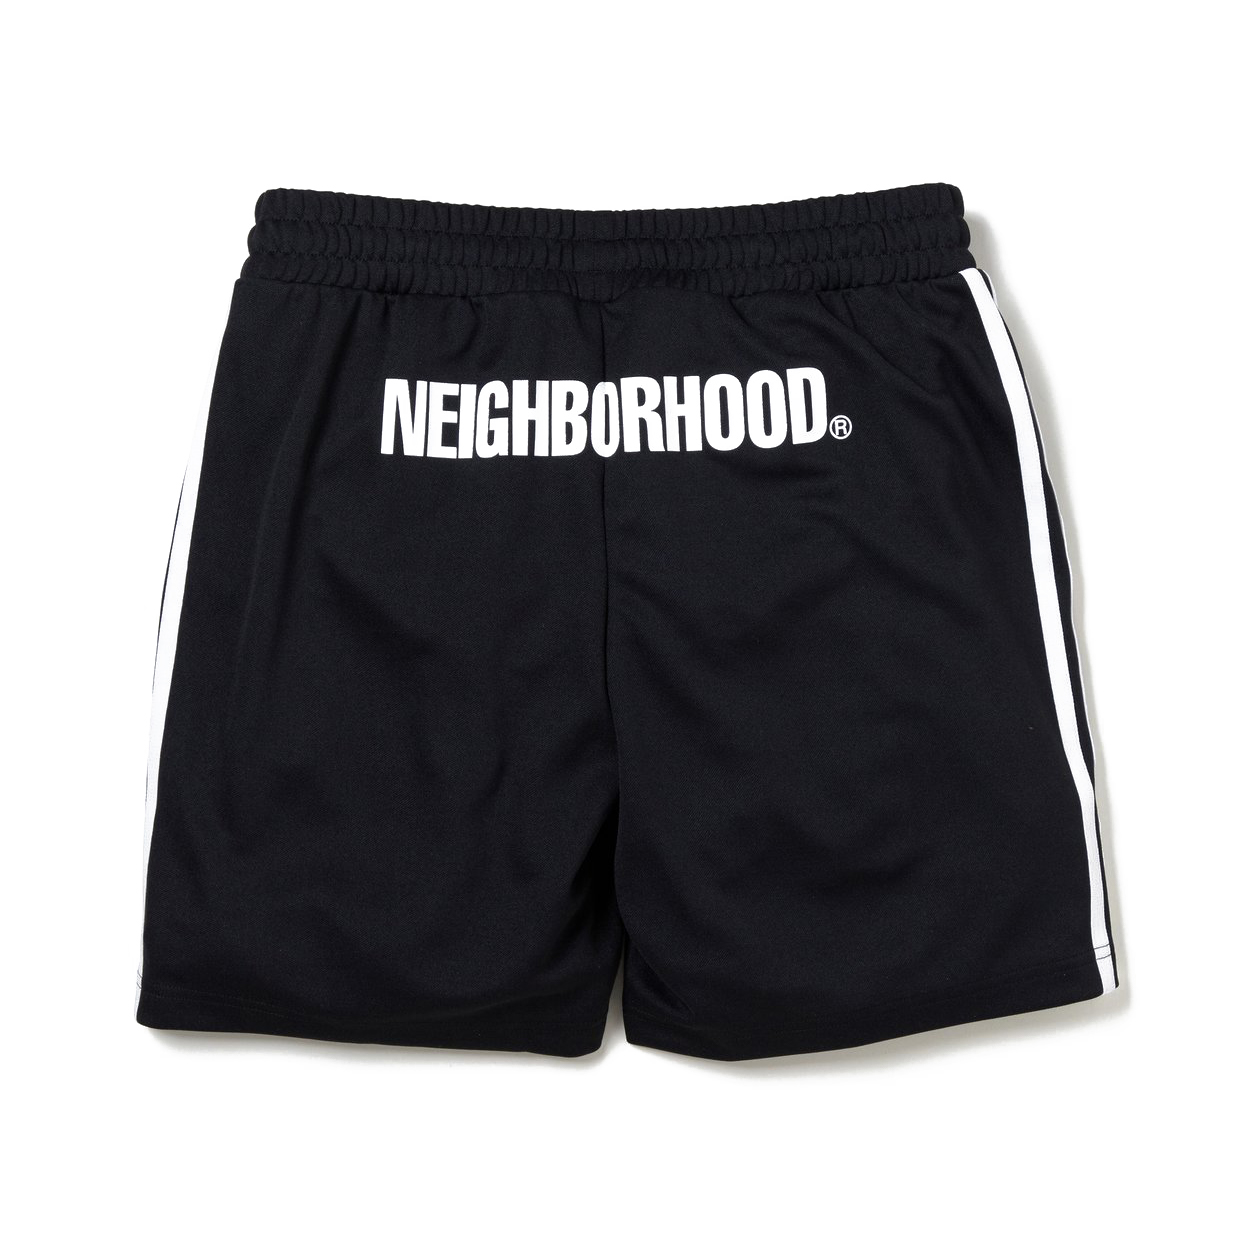 Neighborhood x END x adidas Team Shorts Black Men's - SS21 - GB